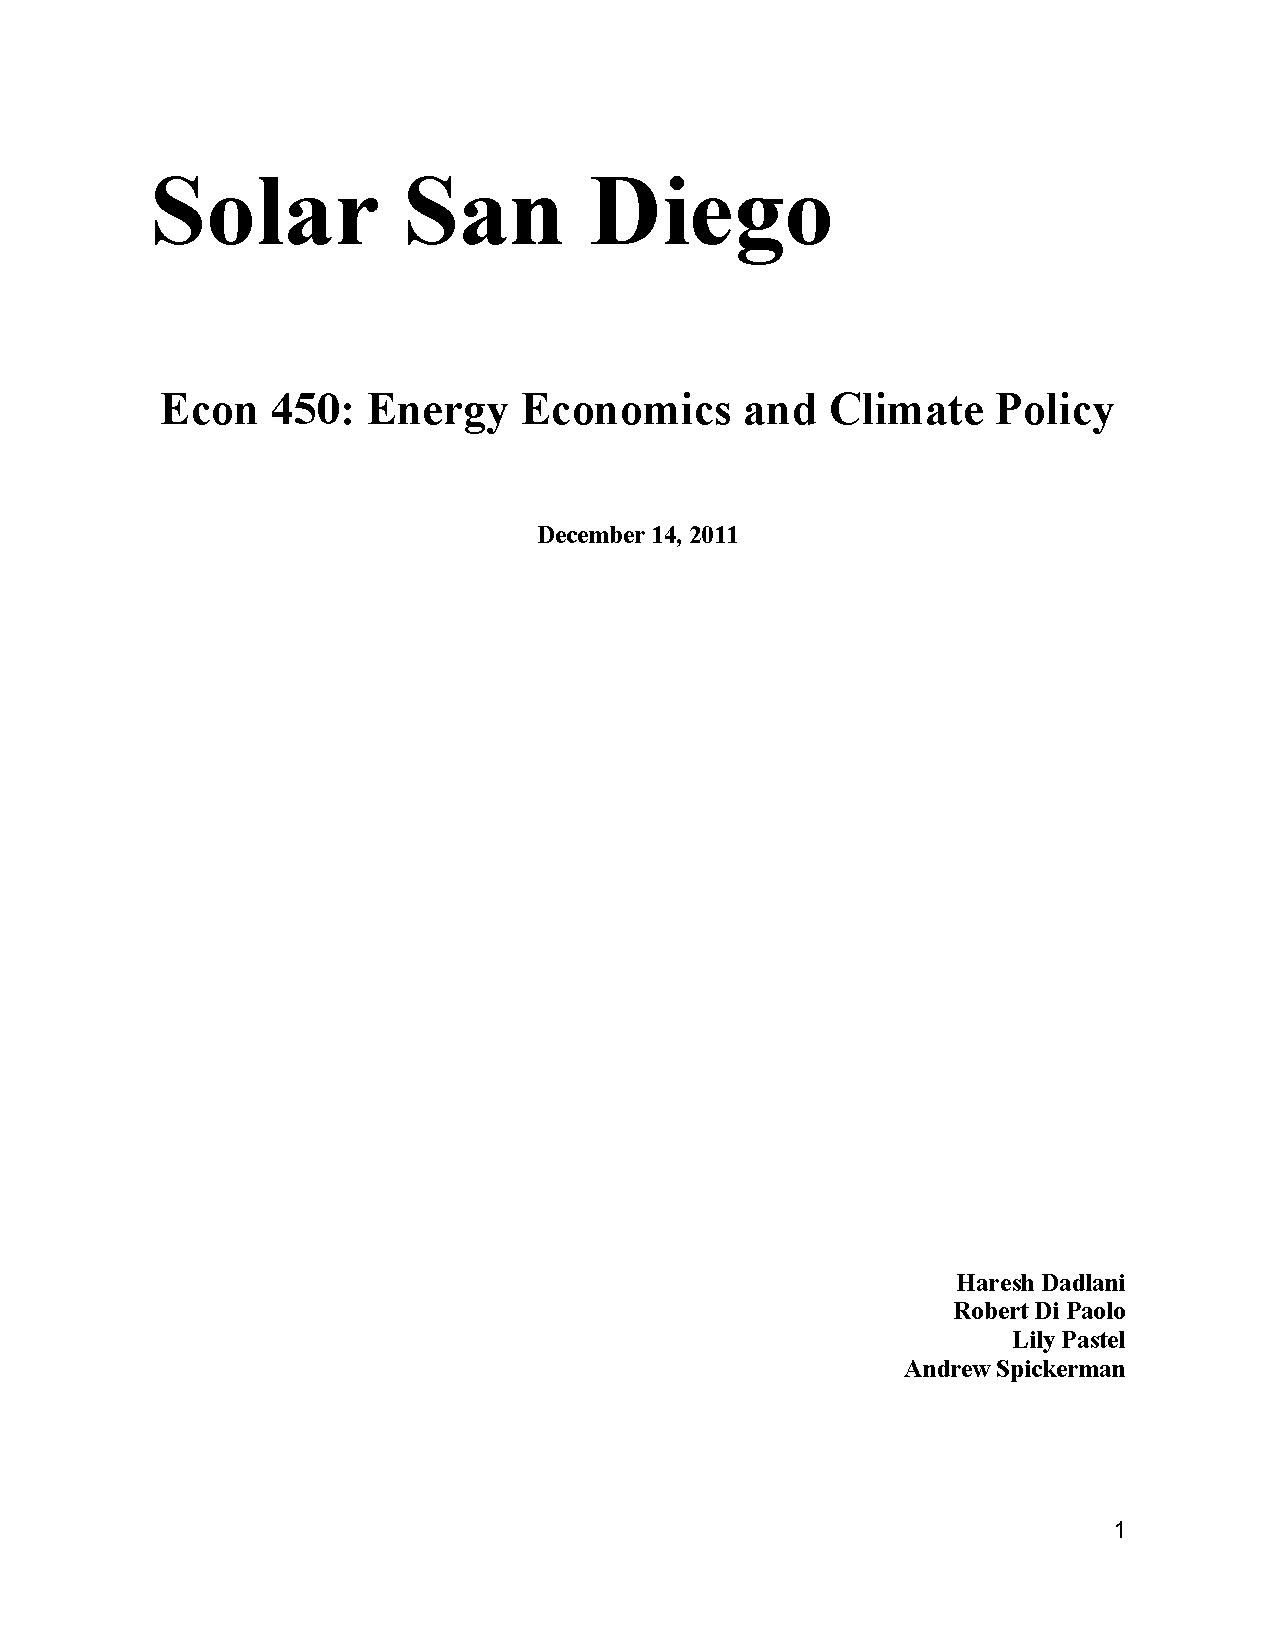 SolarSanDiegoFeasibility.pdf